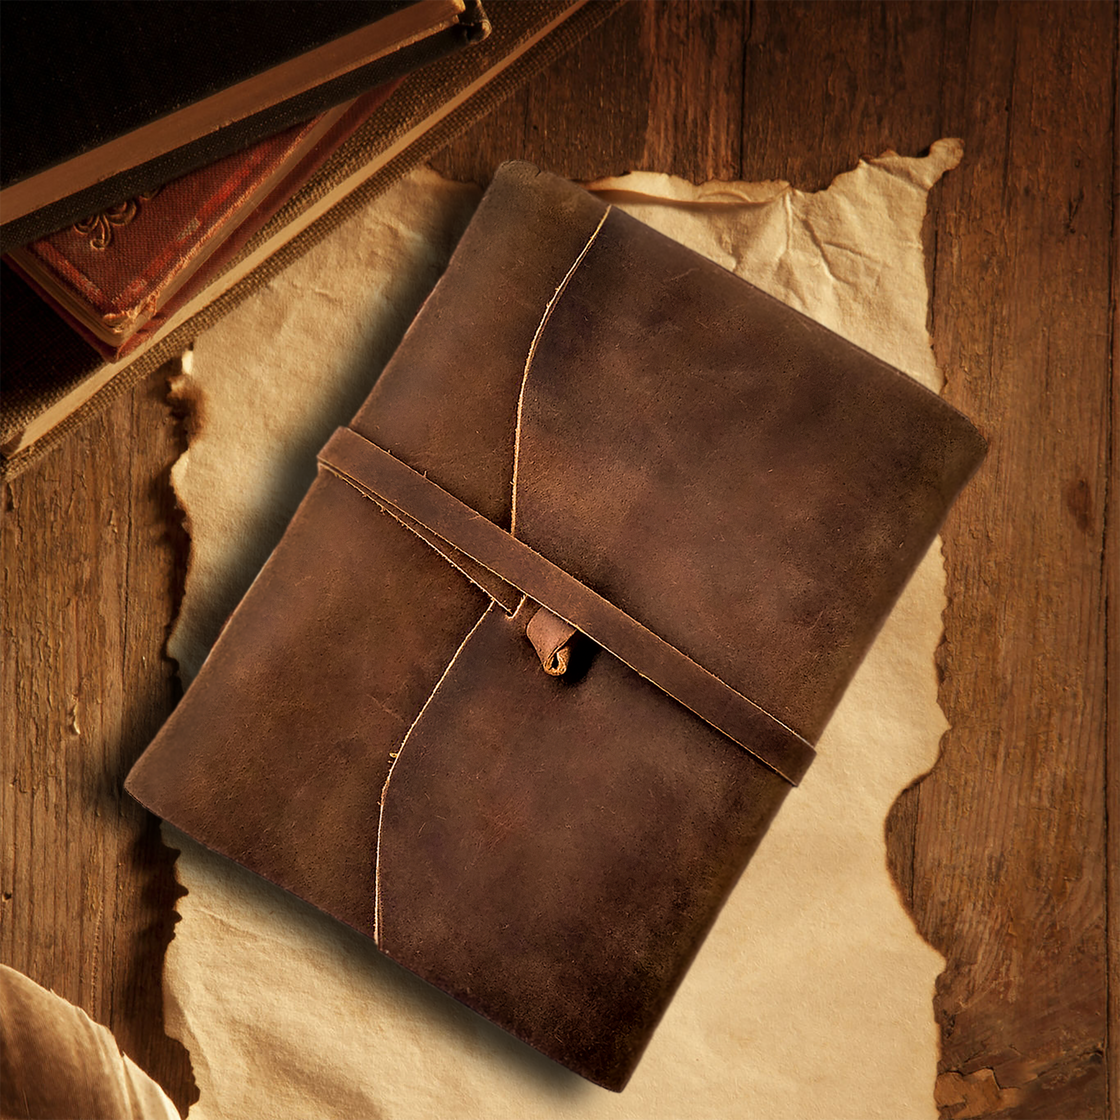 Leather Bound Journal - Handmade